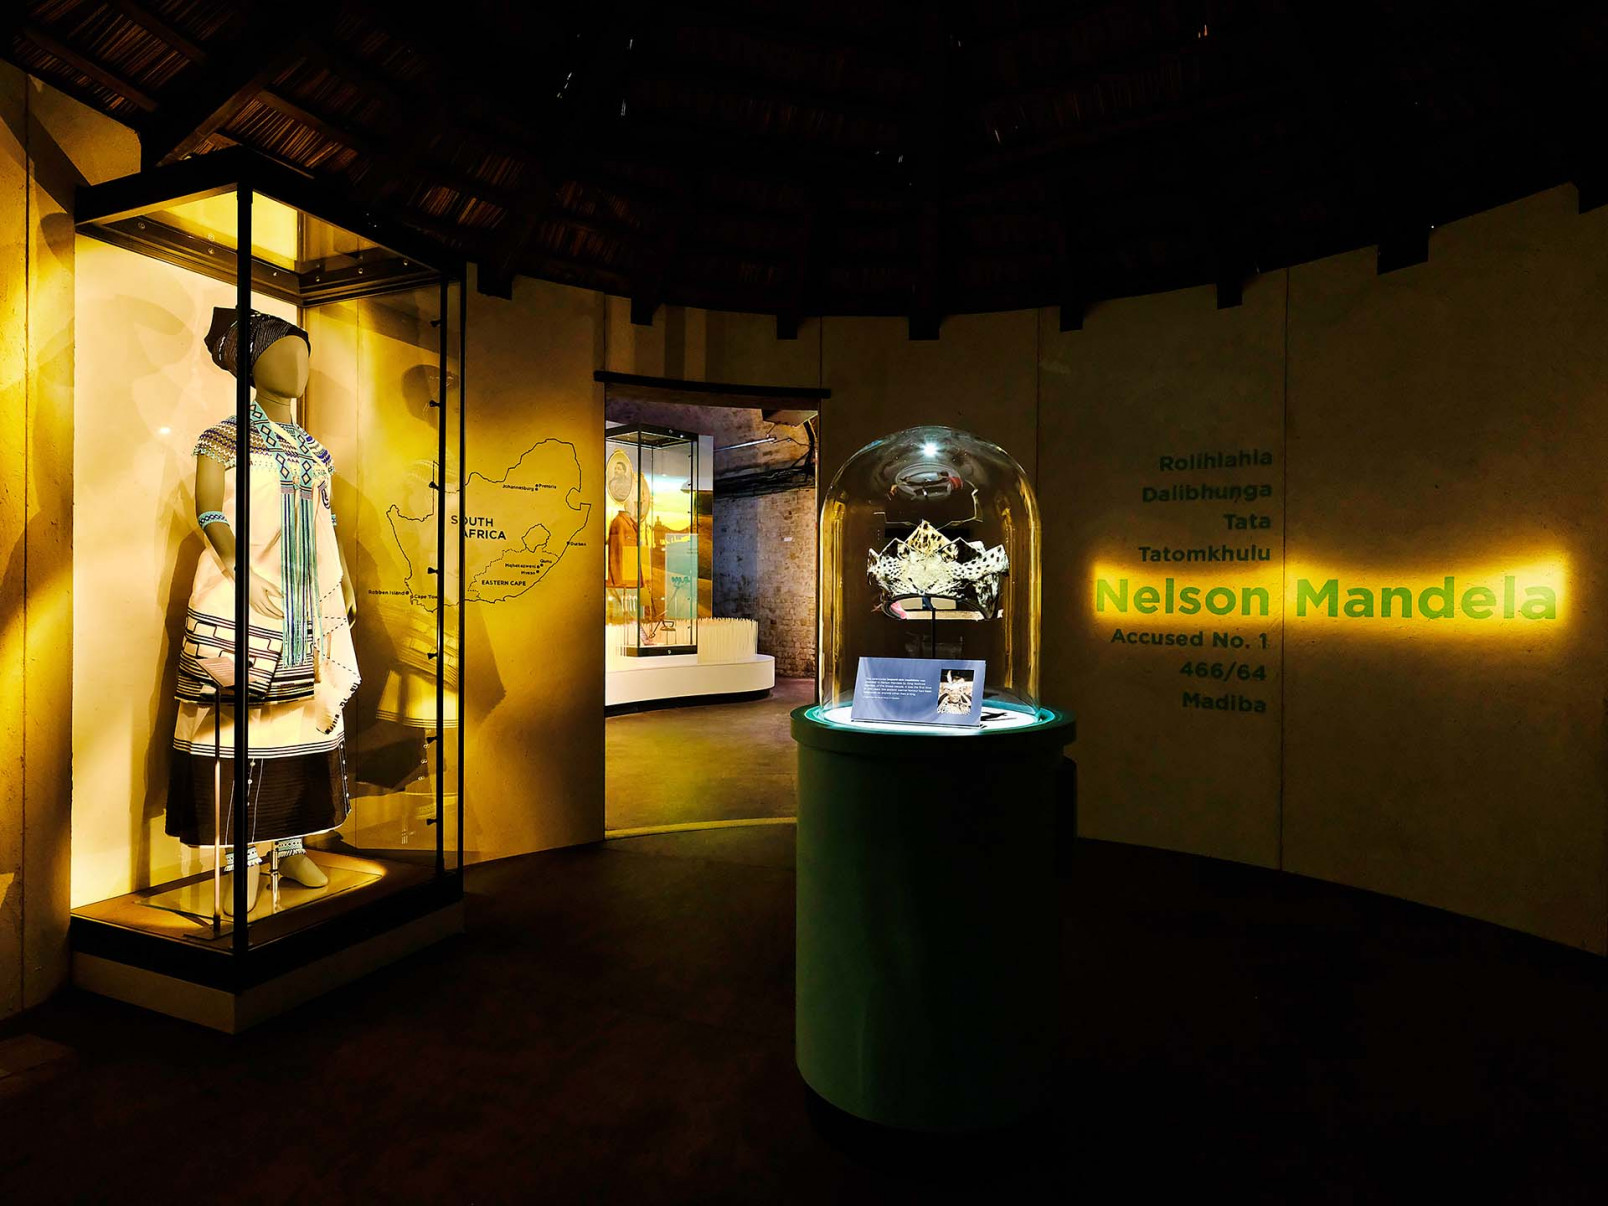 Nelson Mandela Exhibition: View of a Single Exhibit